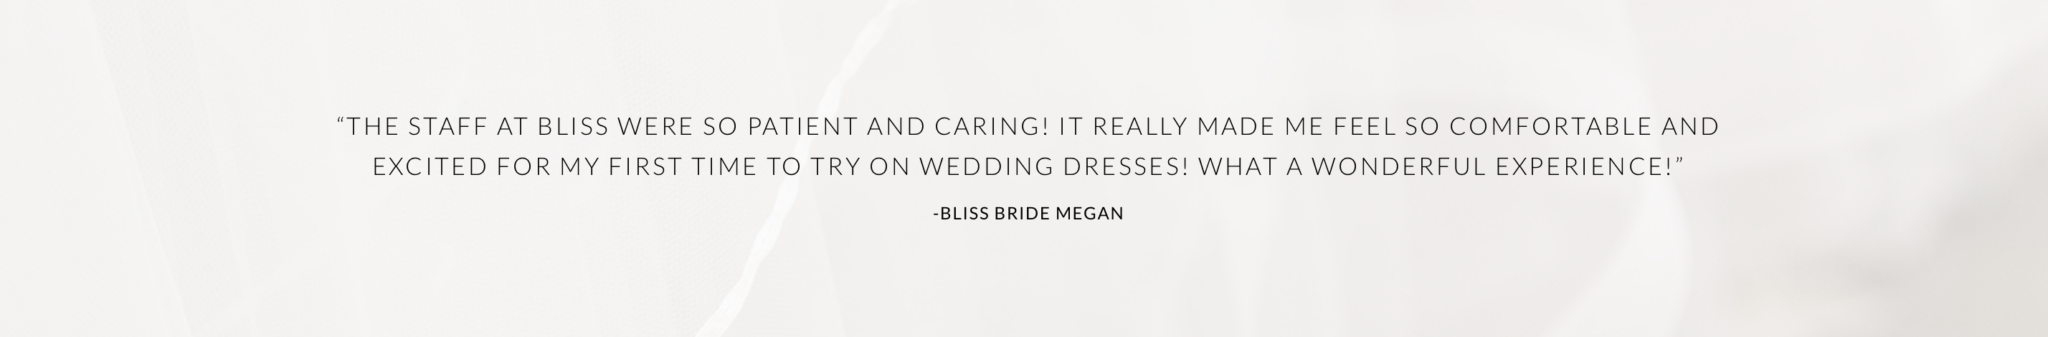 Bliss Bridal Review Meghan